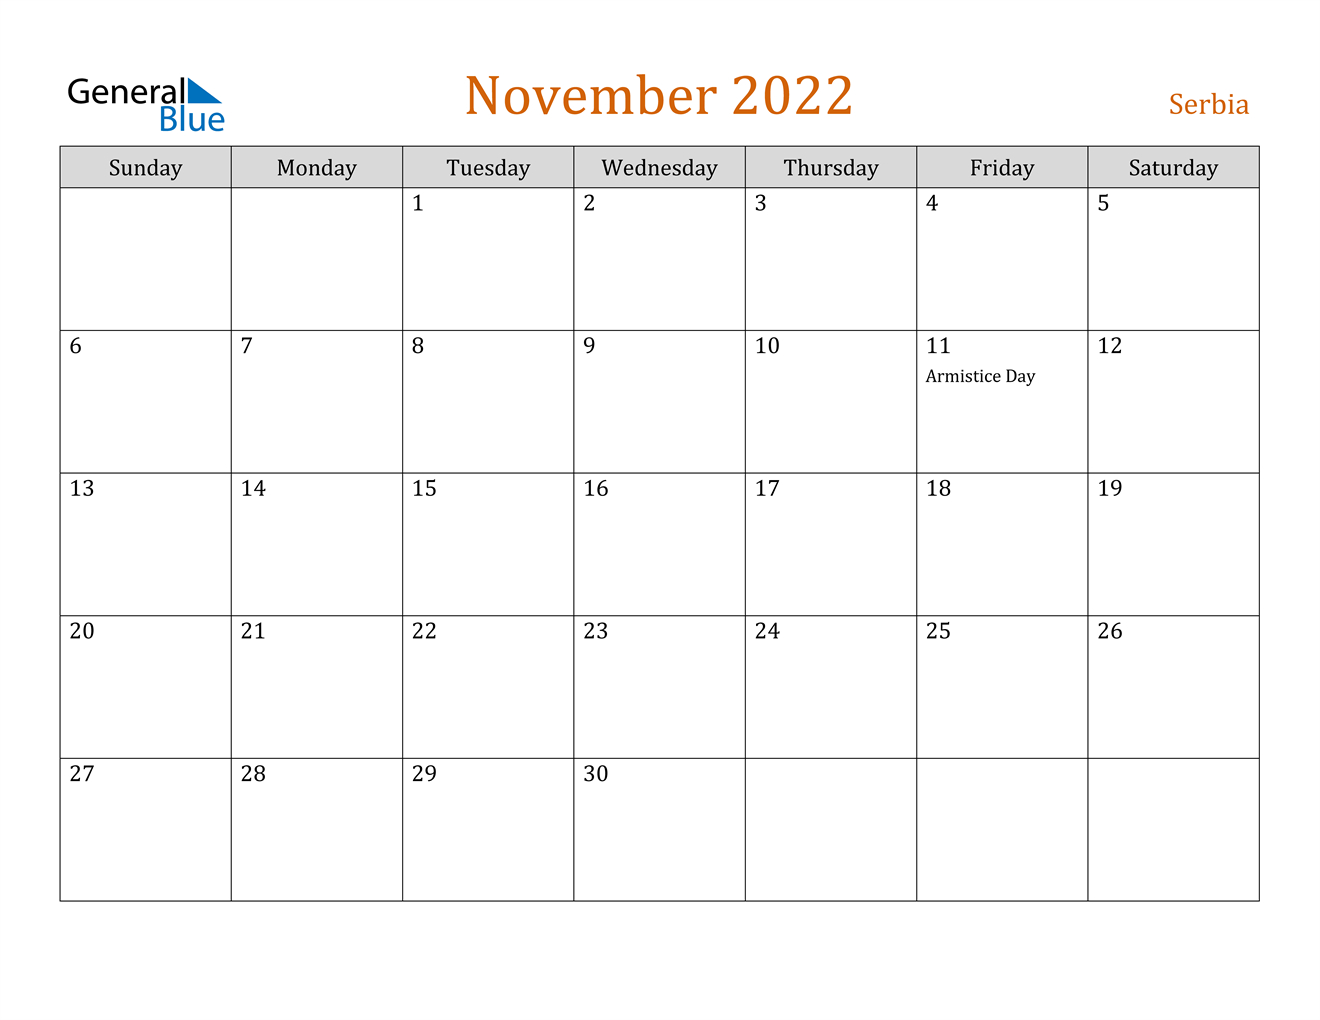 November 2022 Calendar - Serbia